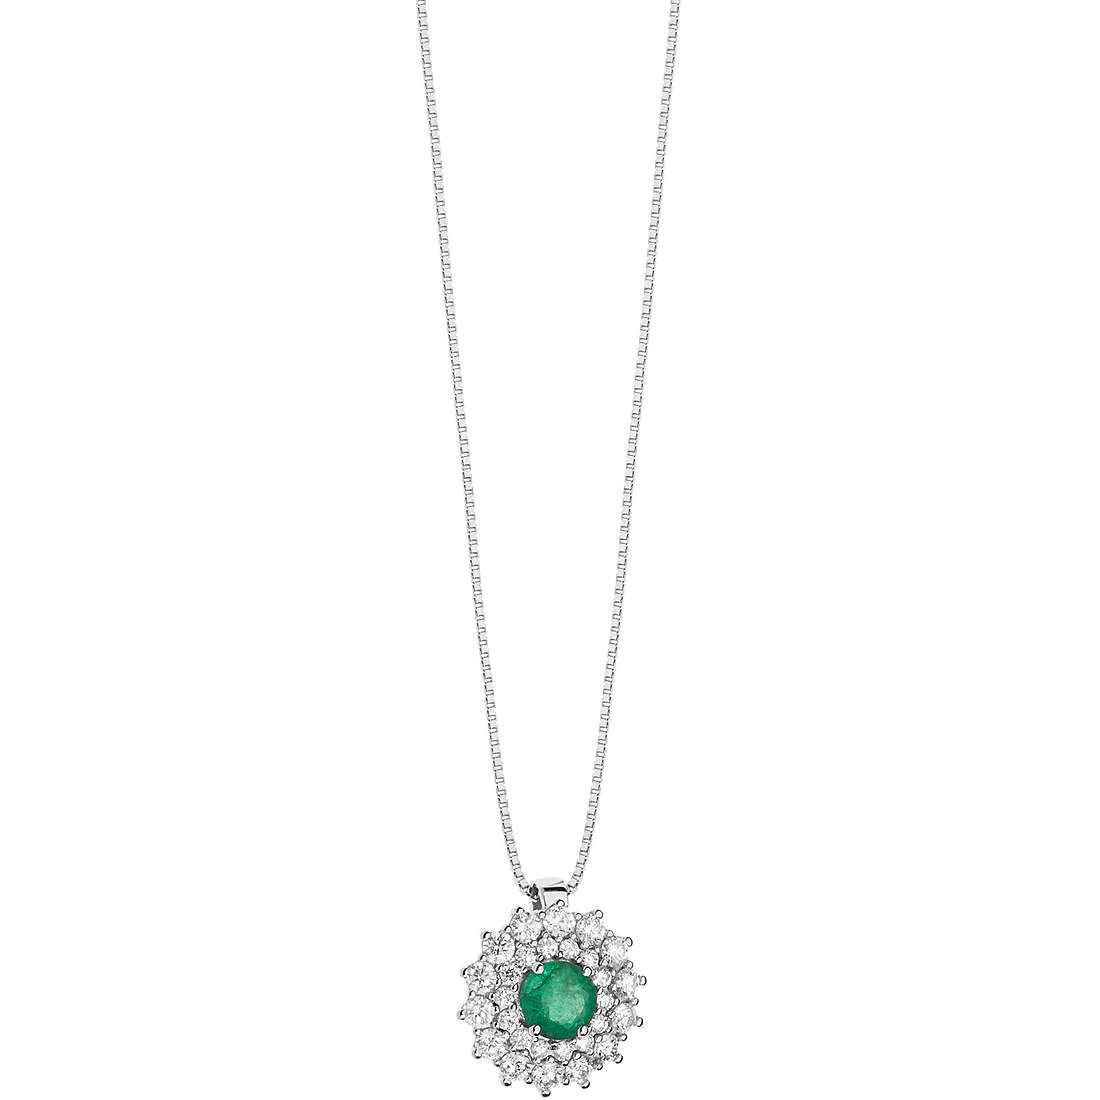 orion GLB 1475 Women's Jewelry Necklace